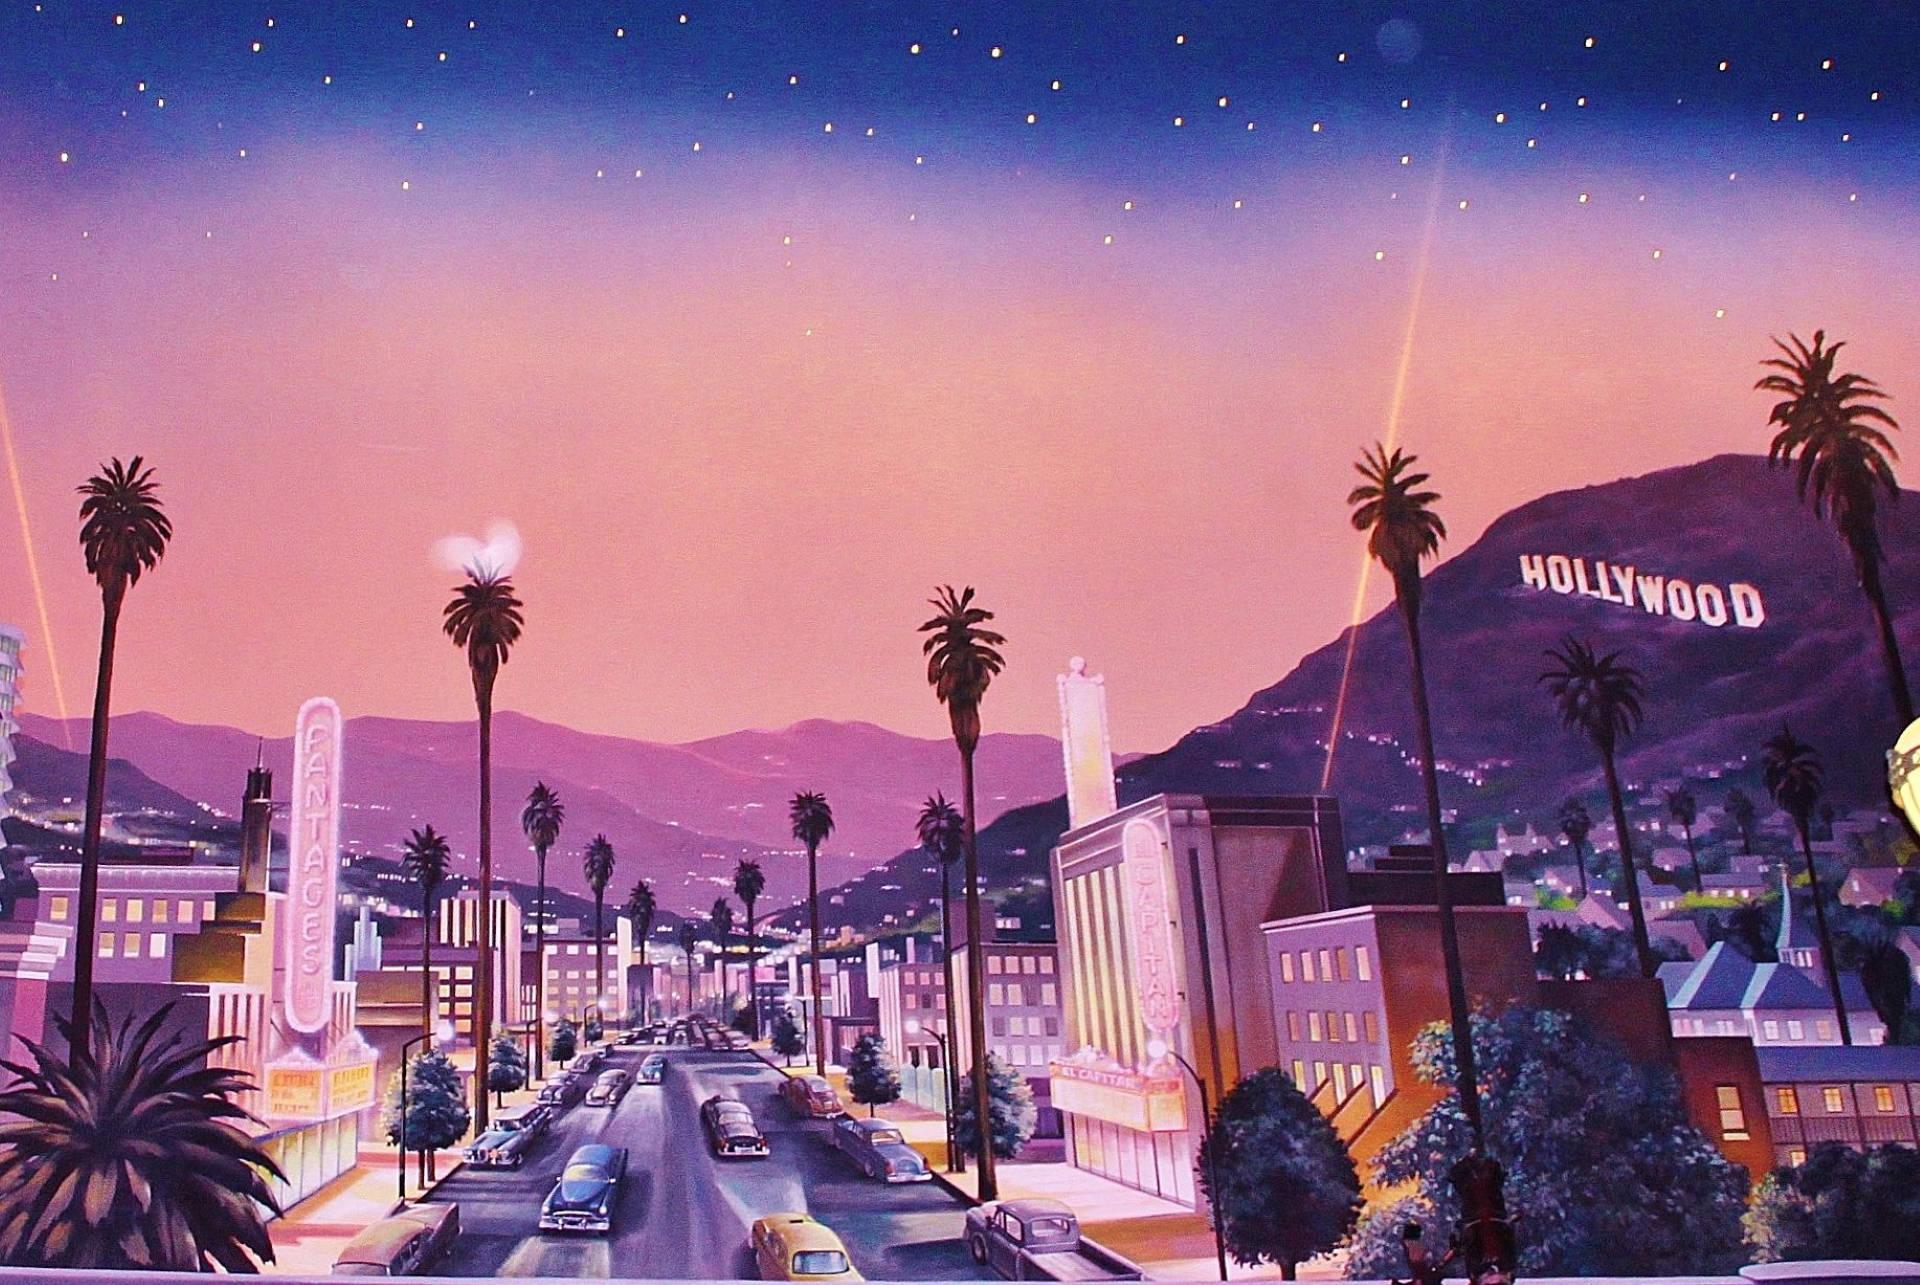  Hollywood Hintergrundbild 1920x1285. Downloaden Faszinierendehollywood Grafikkunst Wallpaper